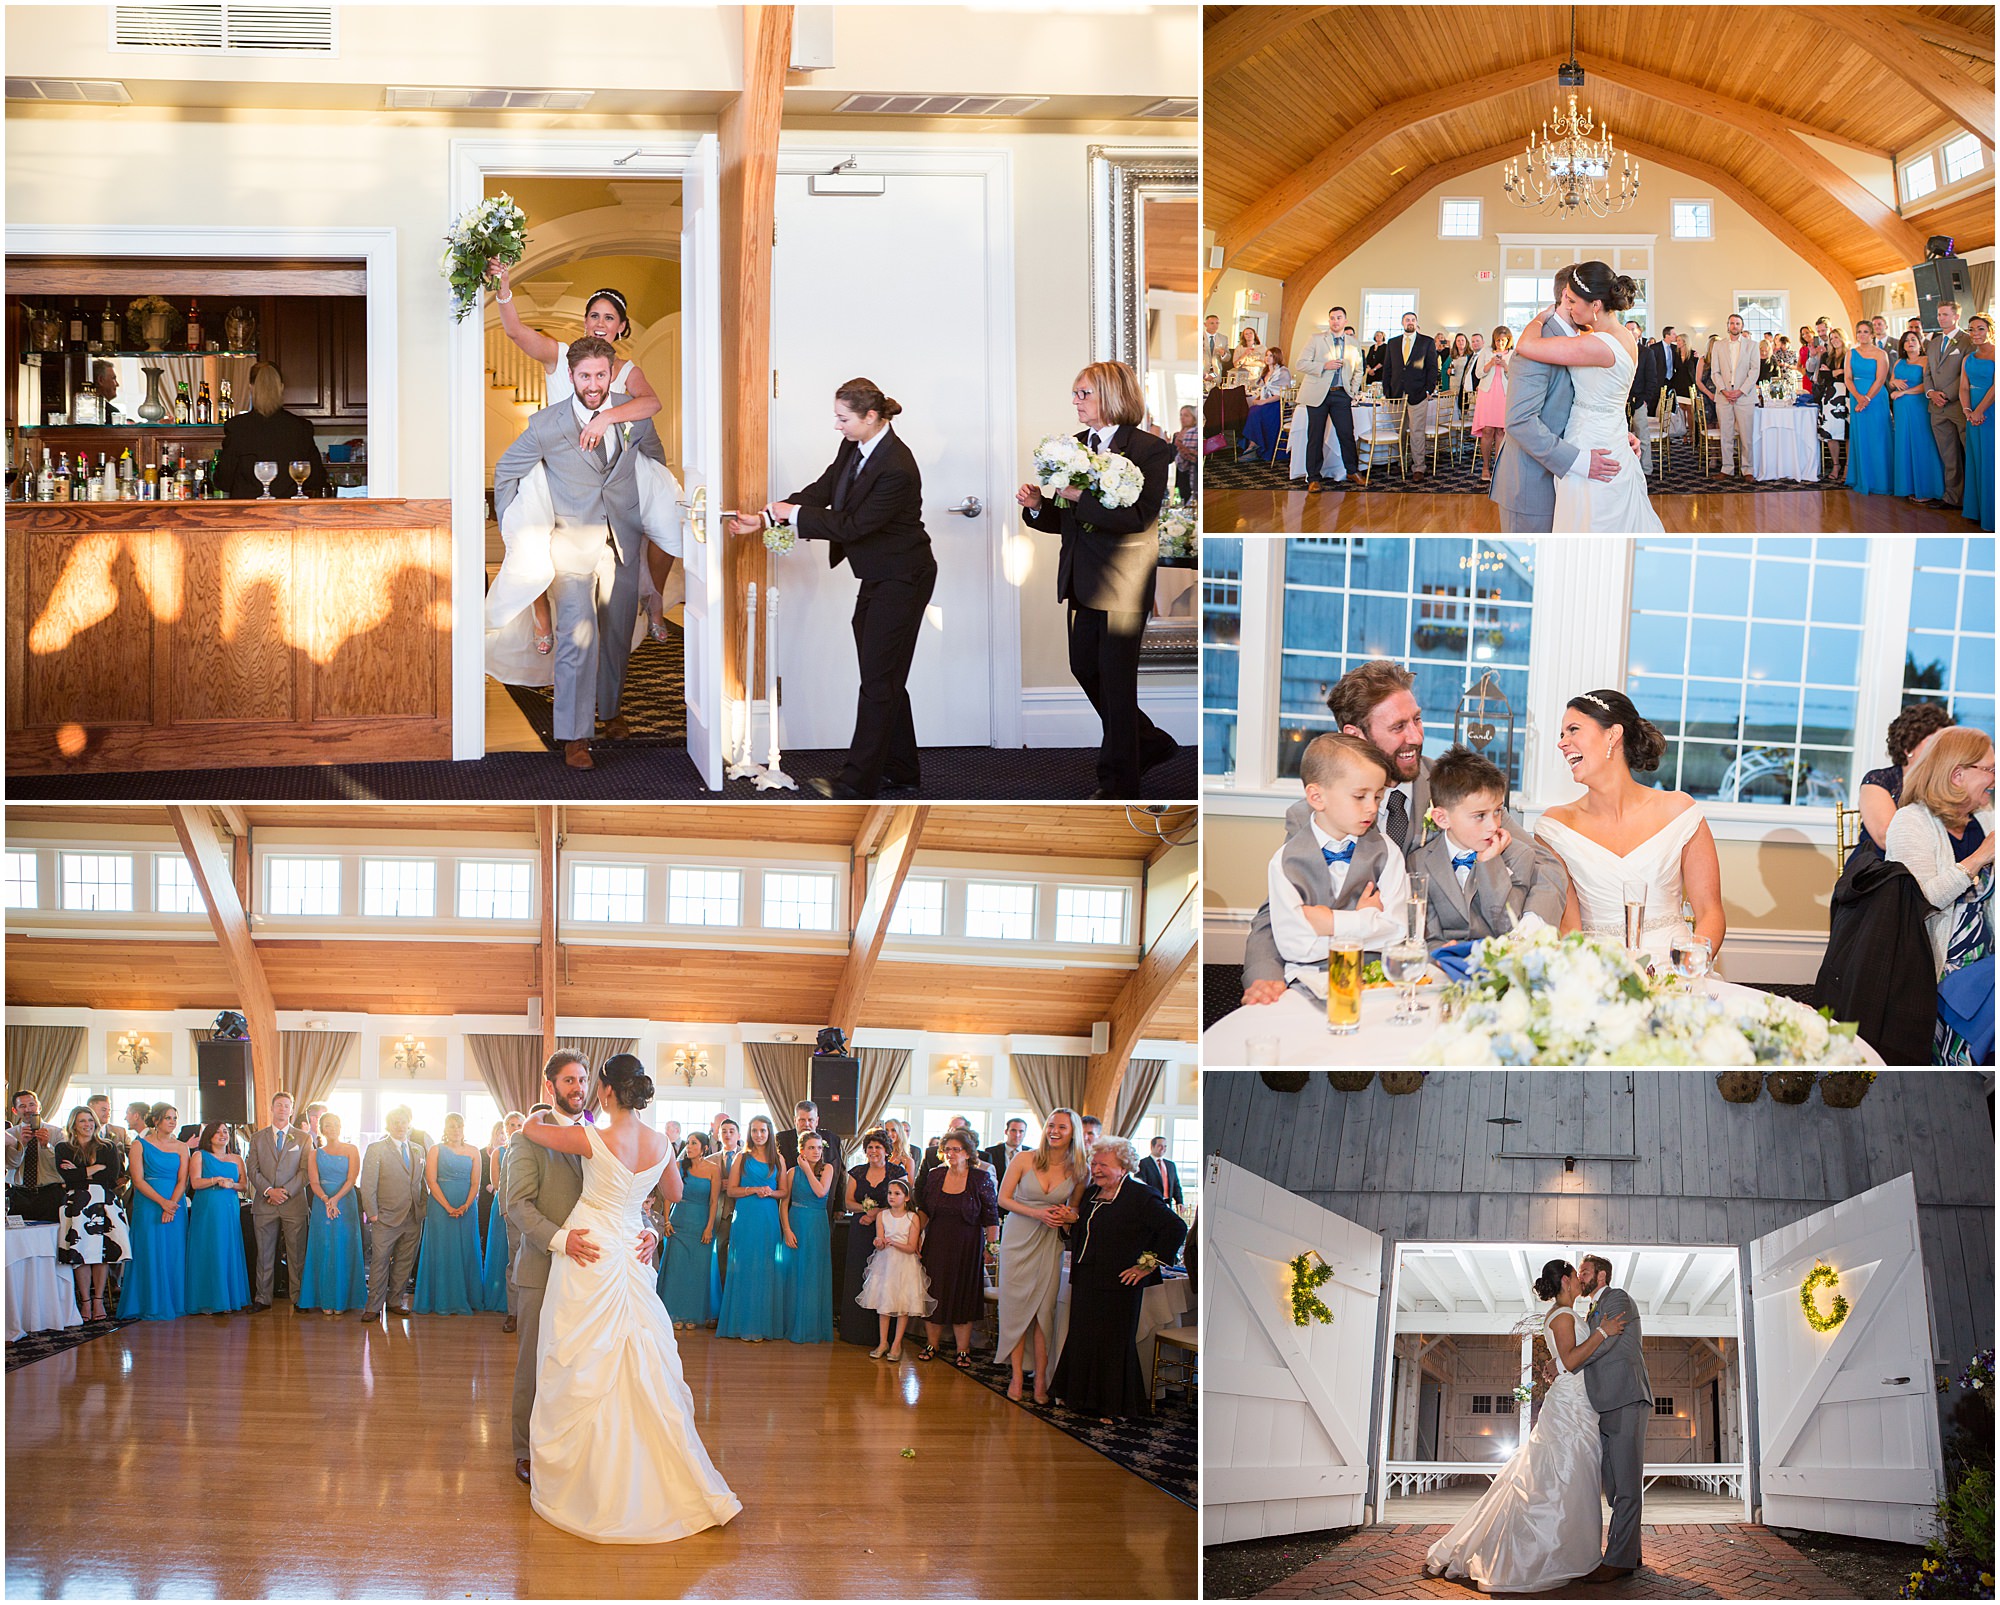 The Best Jersey Shore Wedding Venues - Bonnet Island